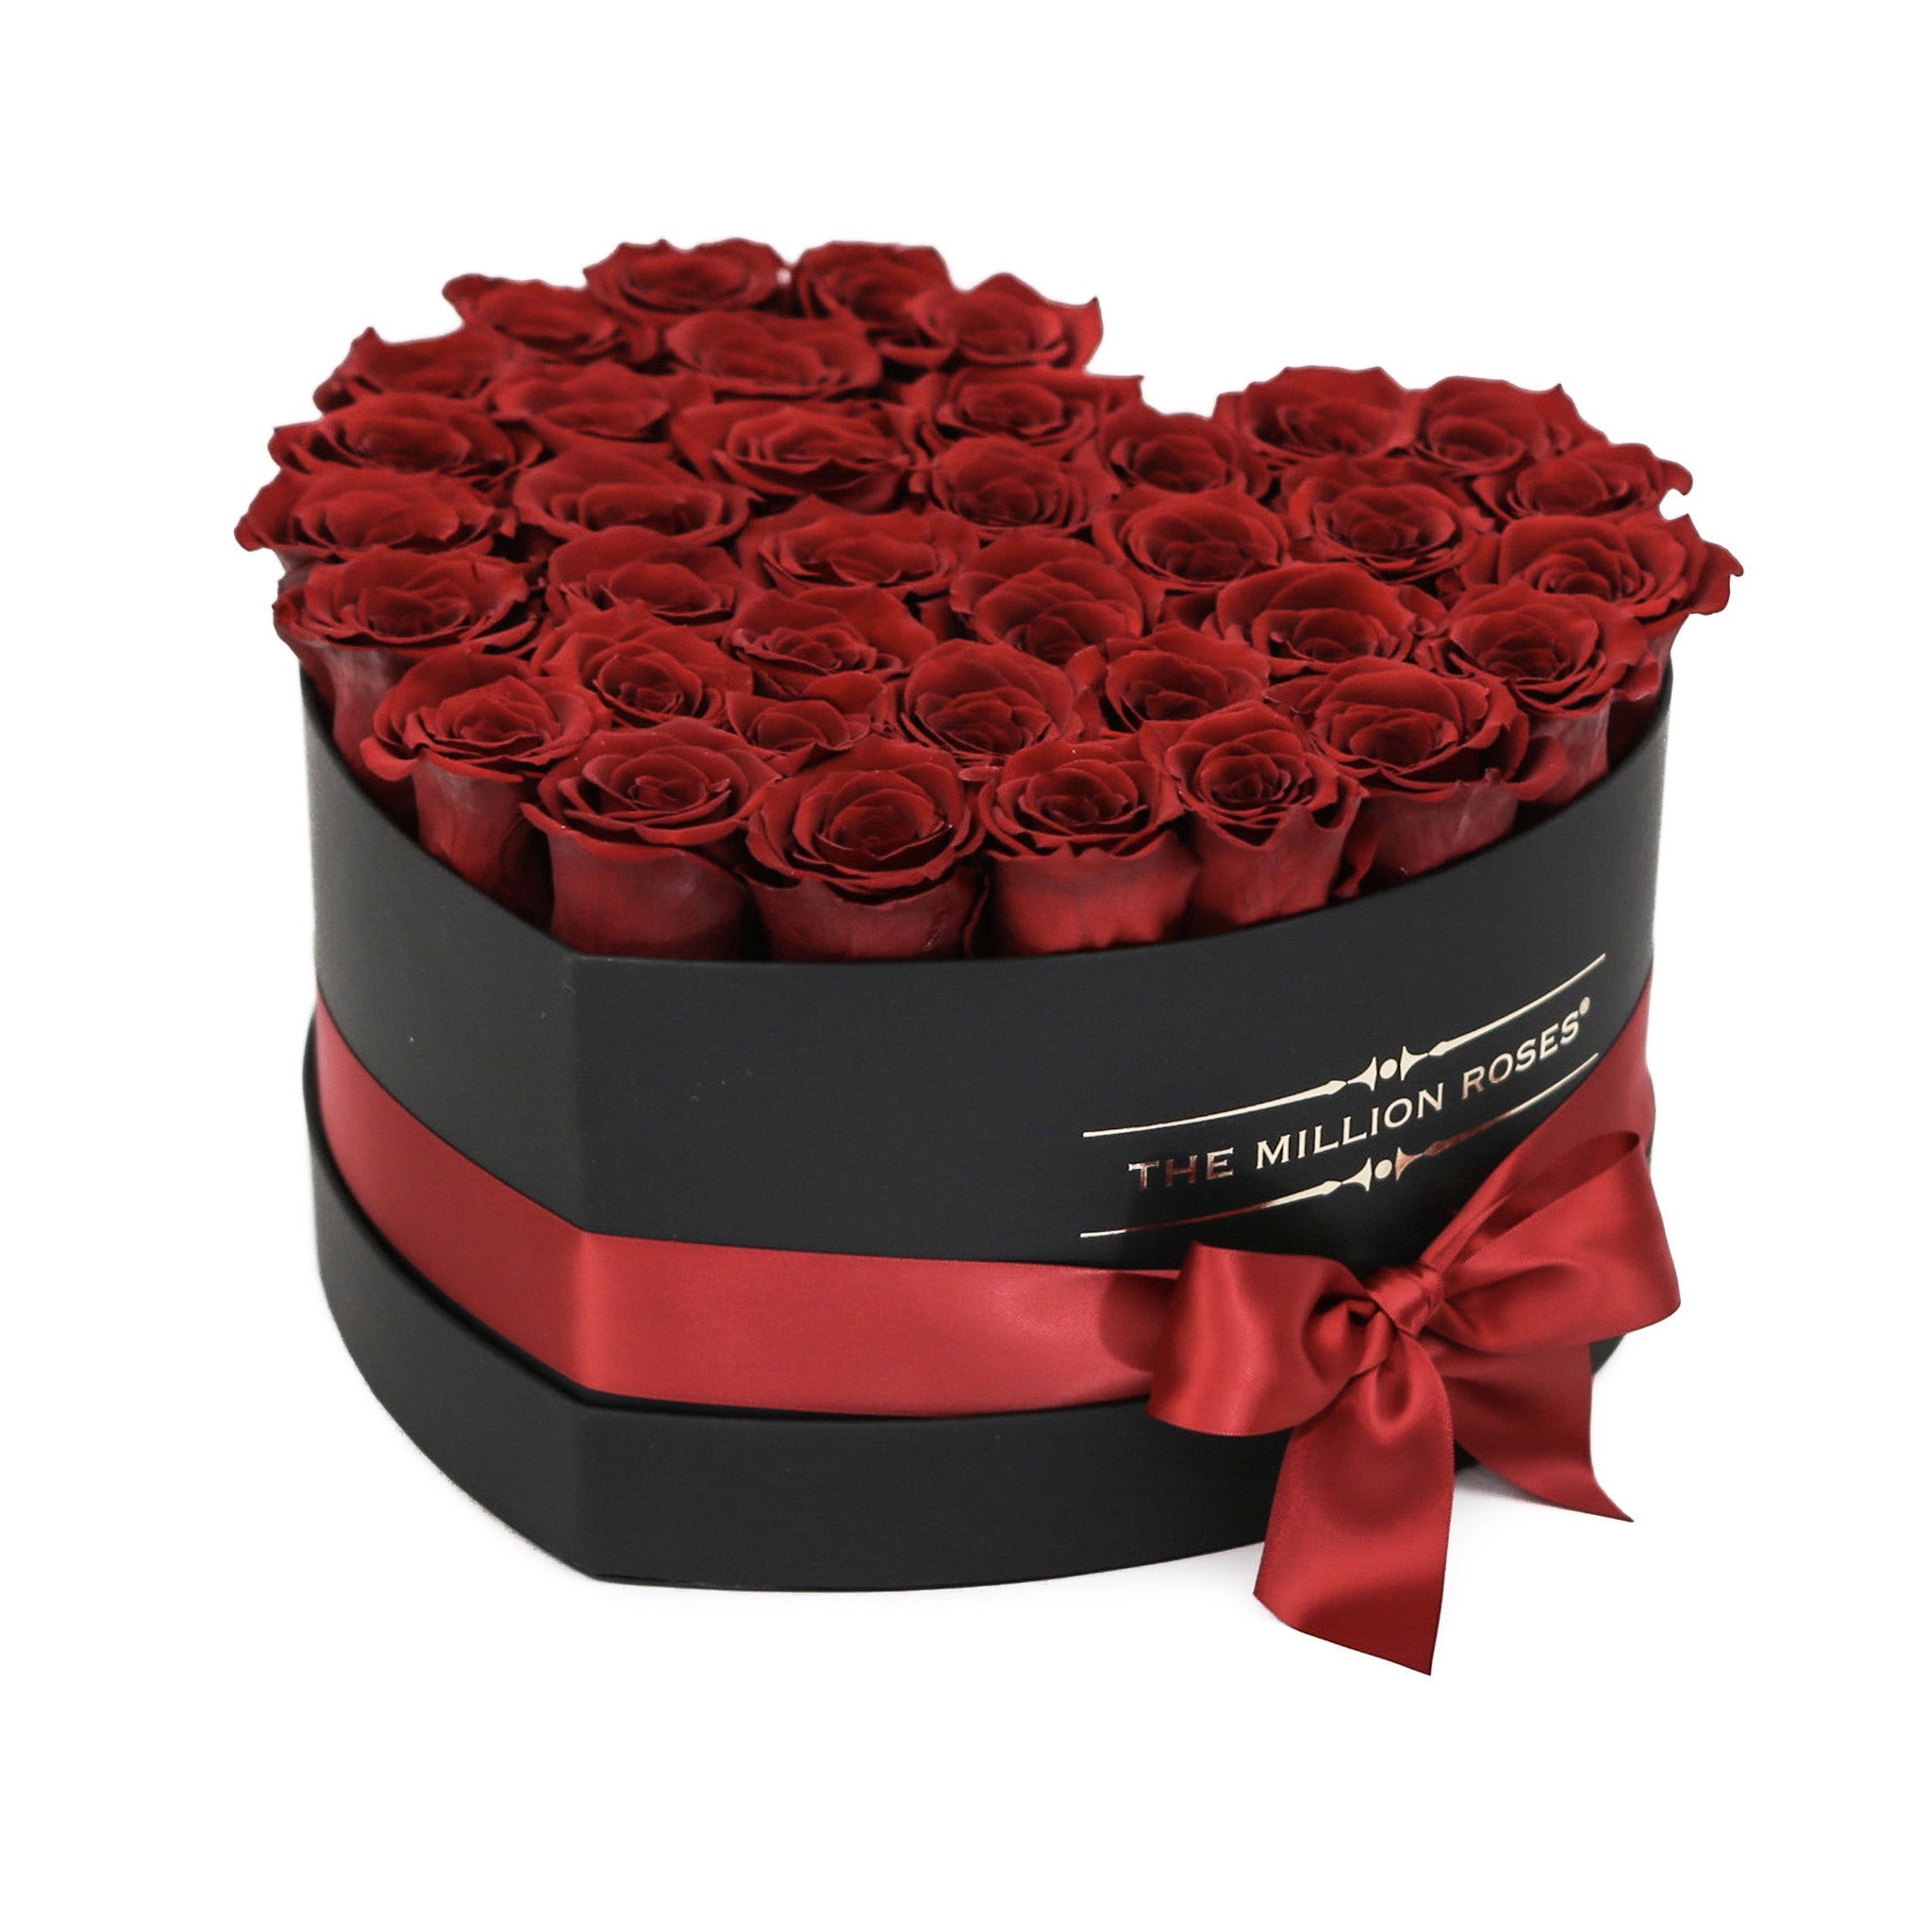 Inimă - trandafiri naturali rosii - Cutie neagră